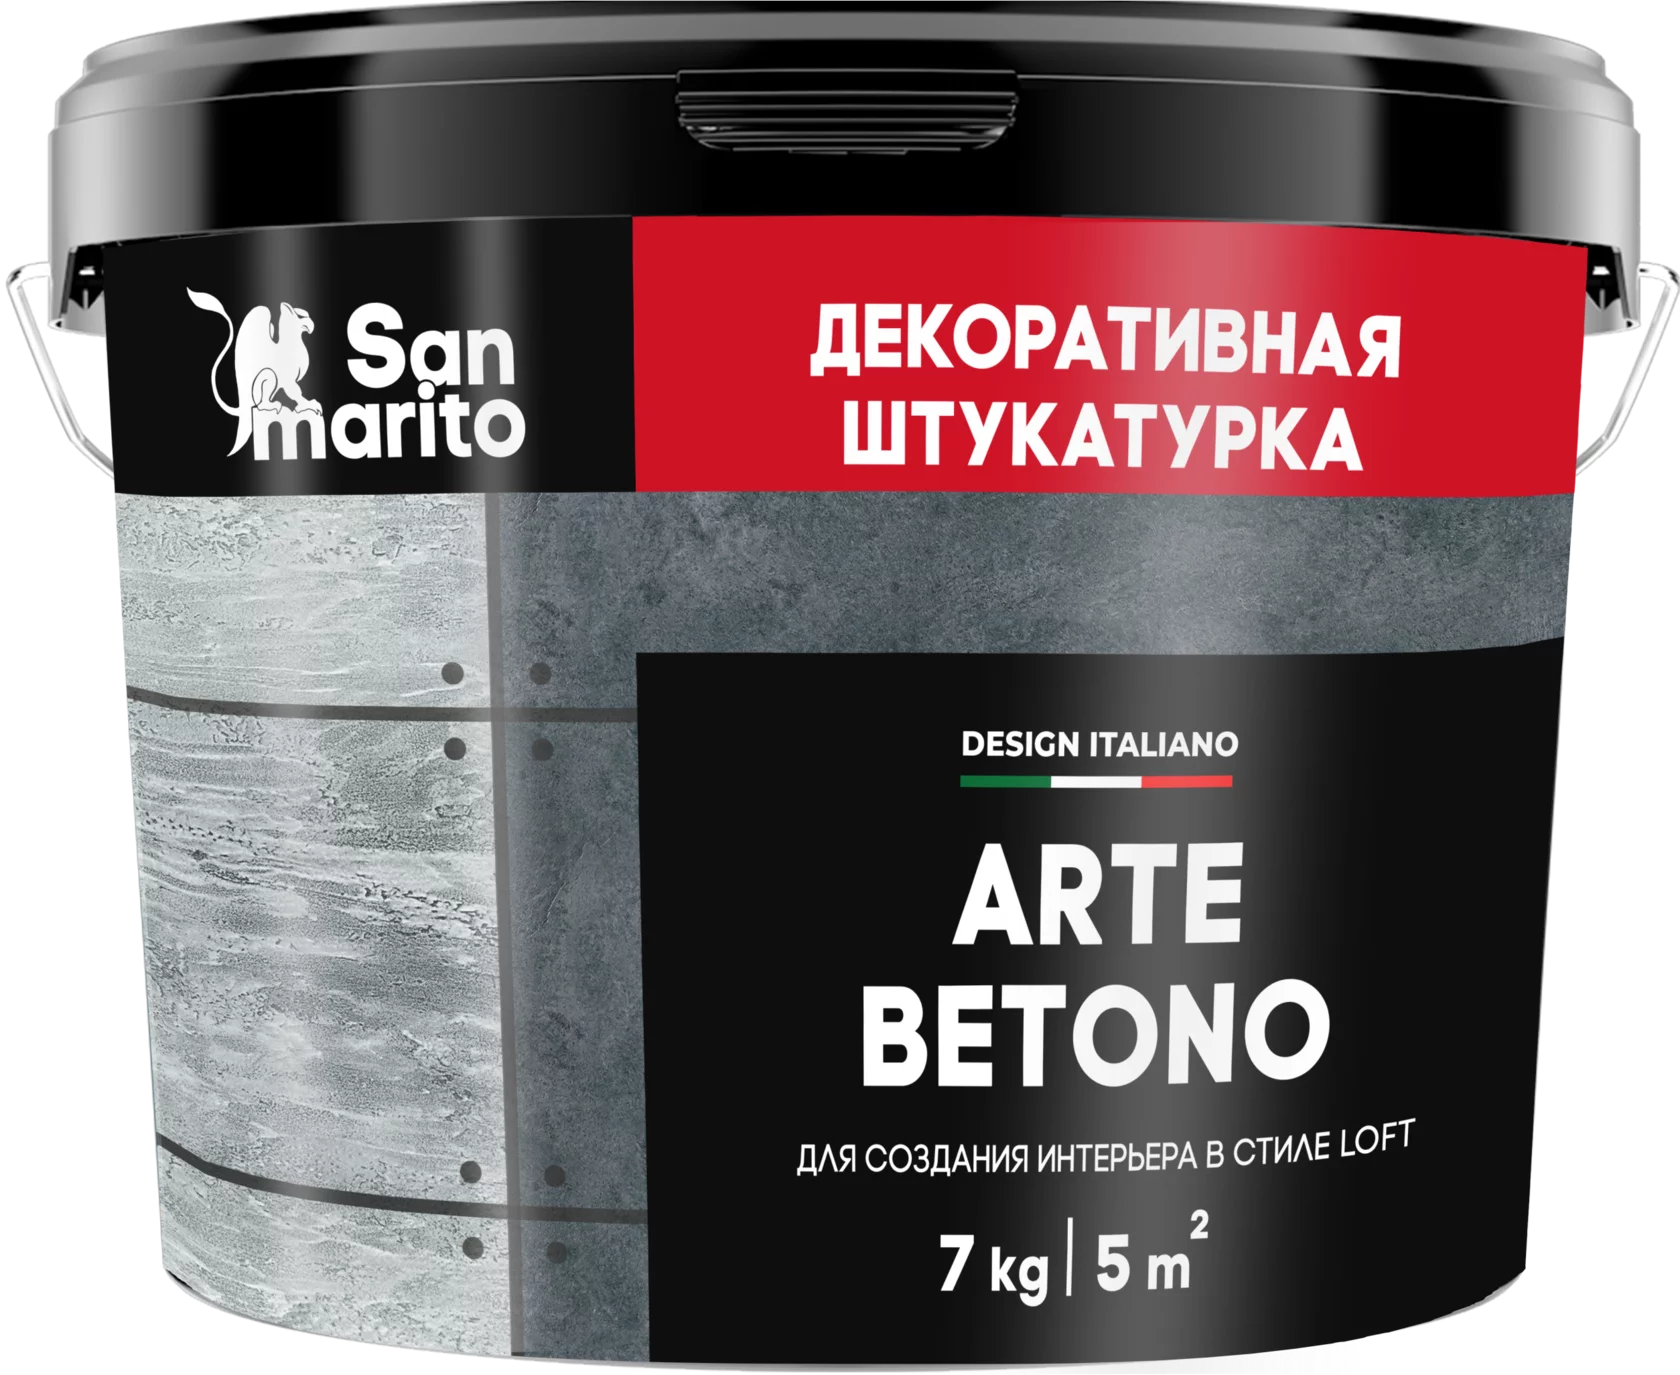 Штукатурка декоративная "San marito Arte-Betono" 15 кг